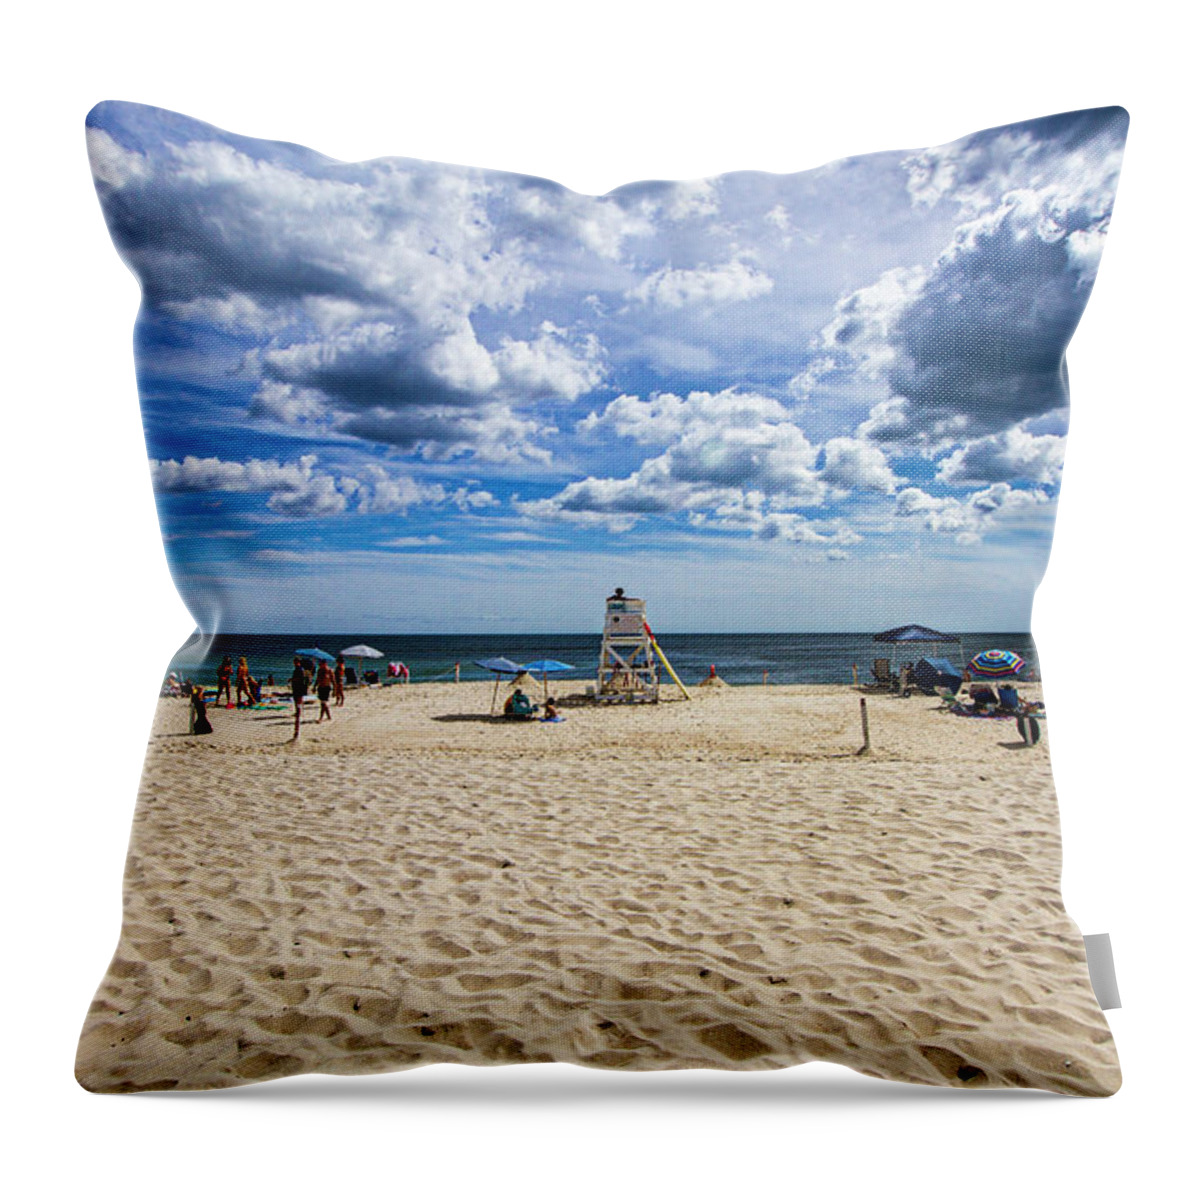 Pike's Throw Pillow featuring the photograph Pike's Beach Typical Summer Day by Robert Seifert